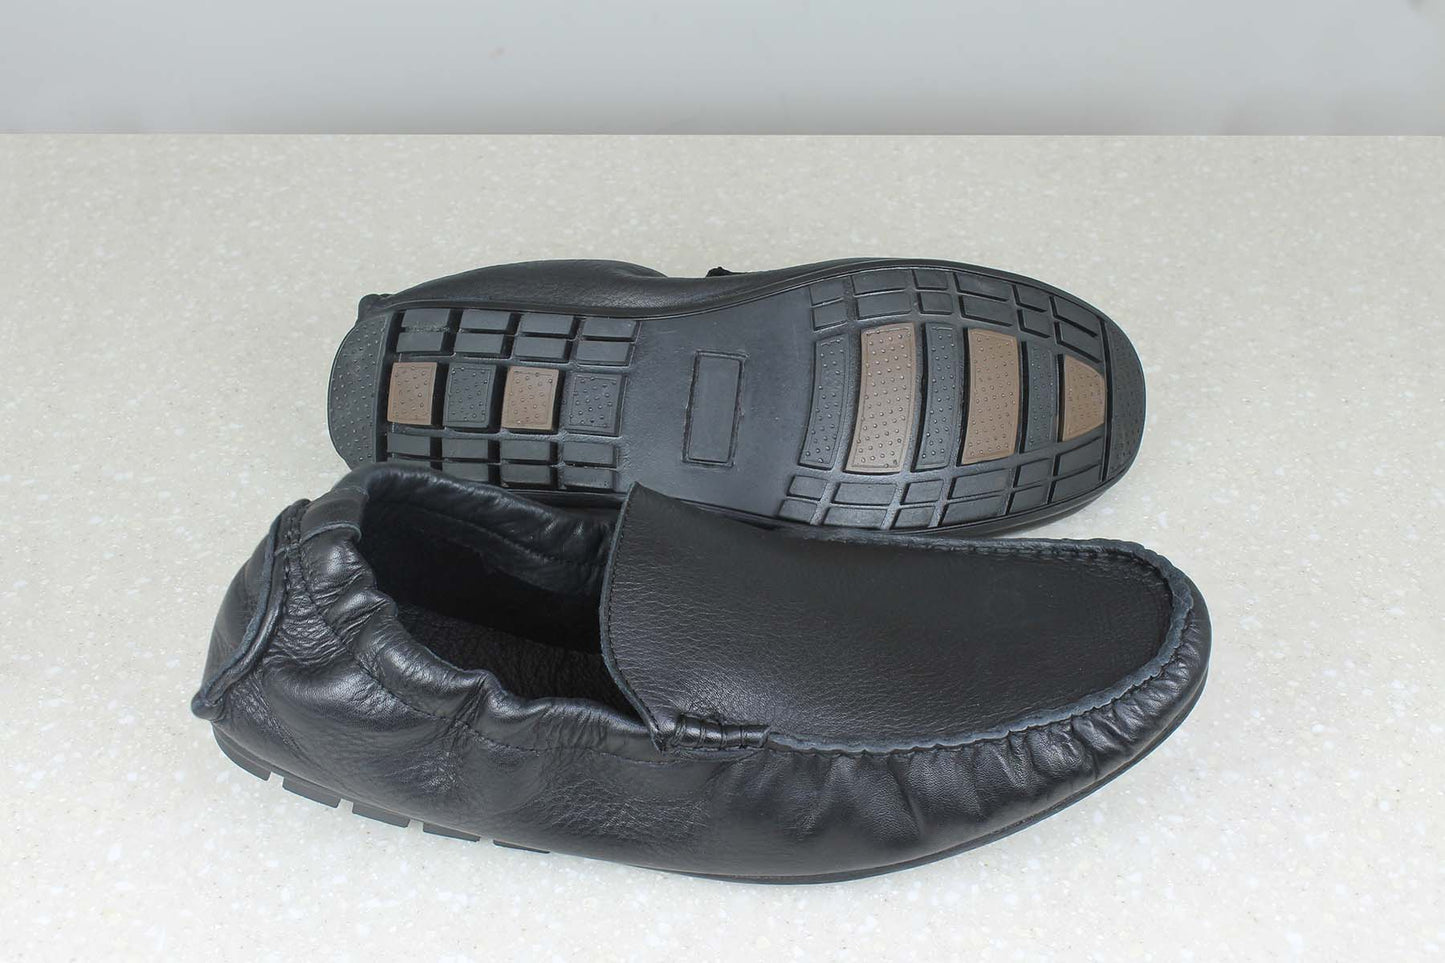 Privo Driving Shoe-Black For Men